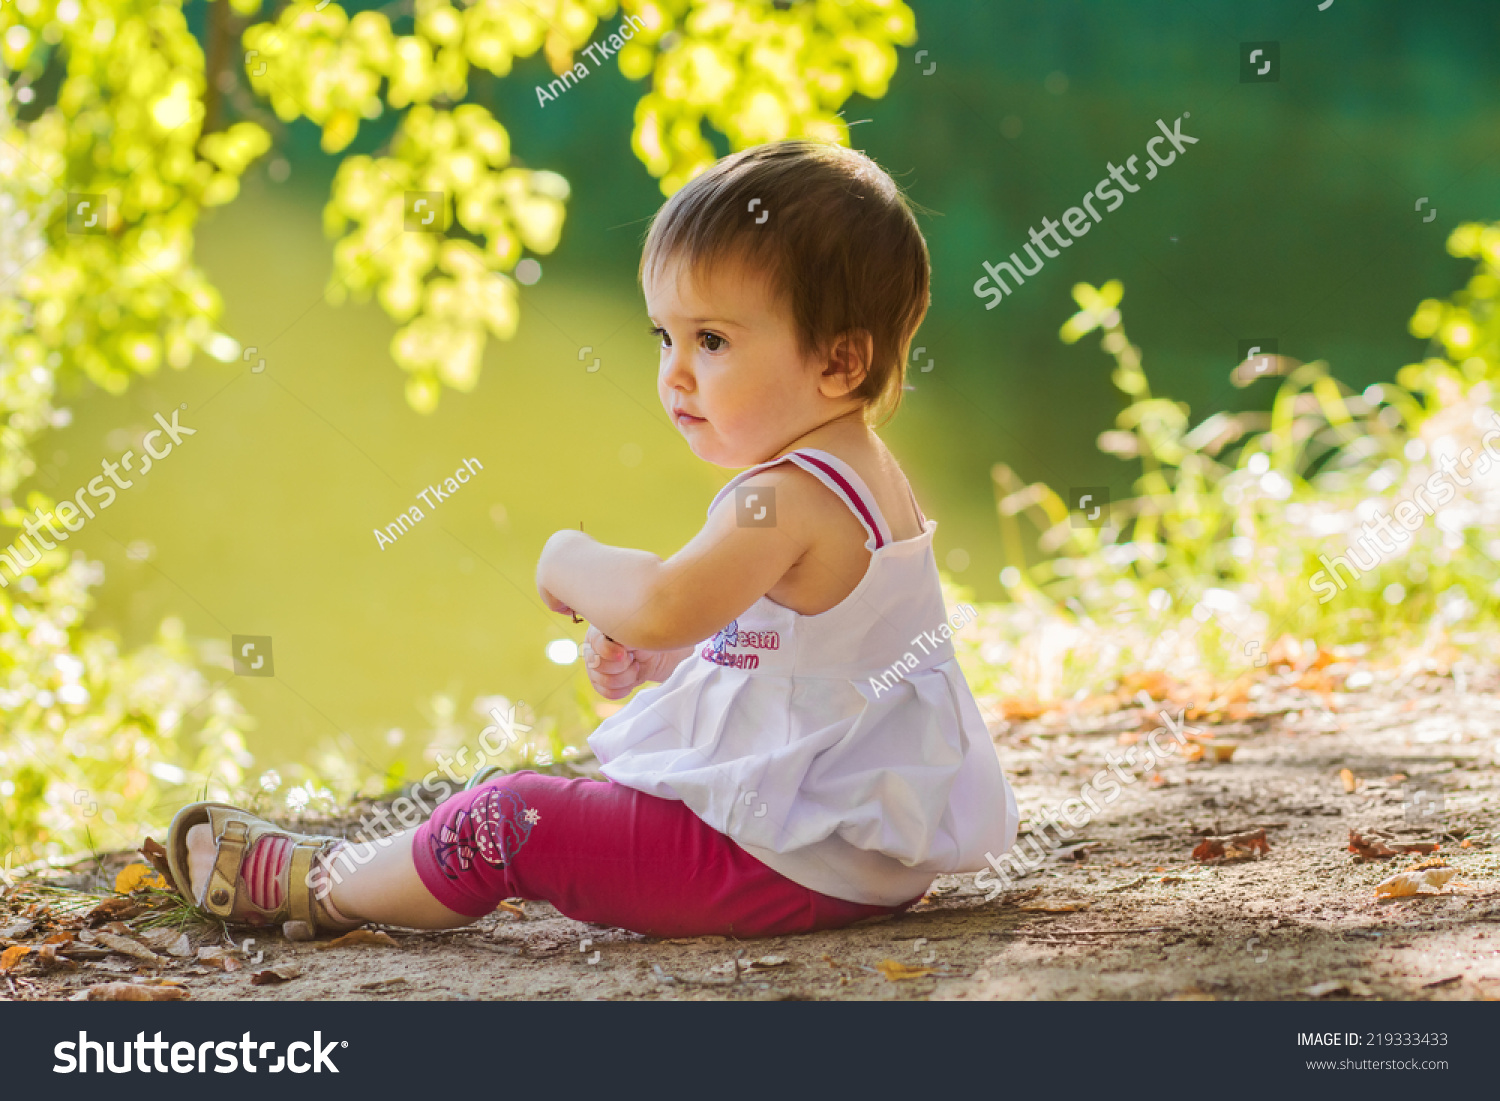 Baby Girl Sitting Alone On Shore Stock Photo 219333433 - Shutterstock